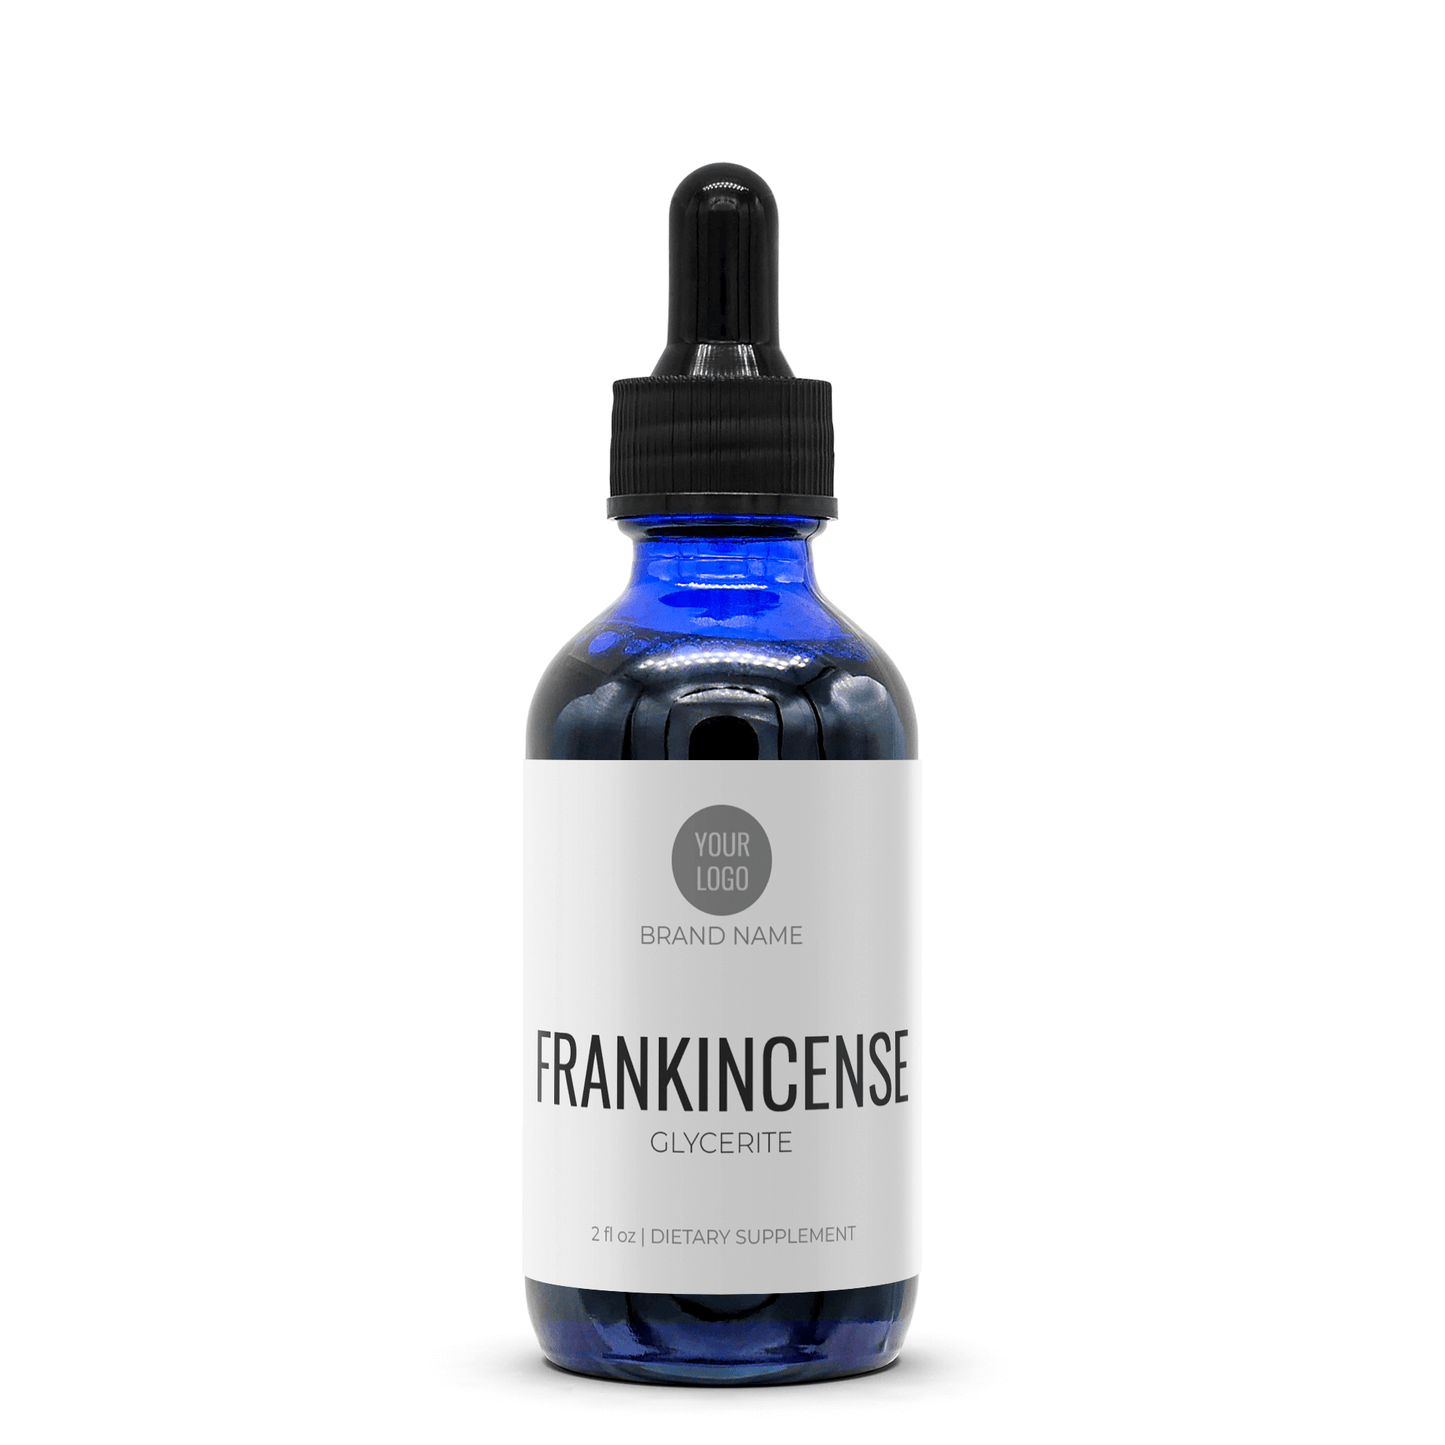 Frankincense Resin